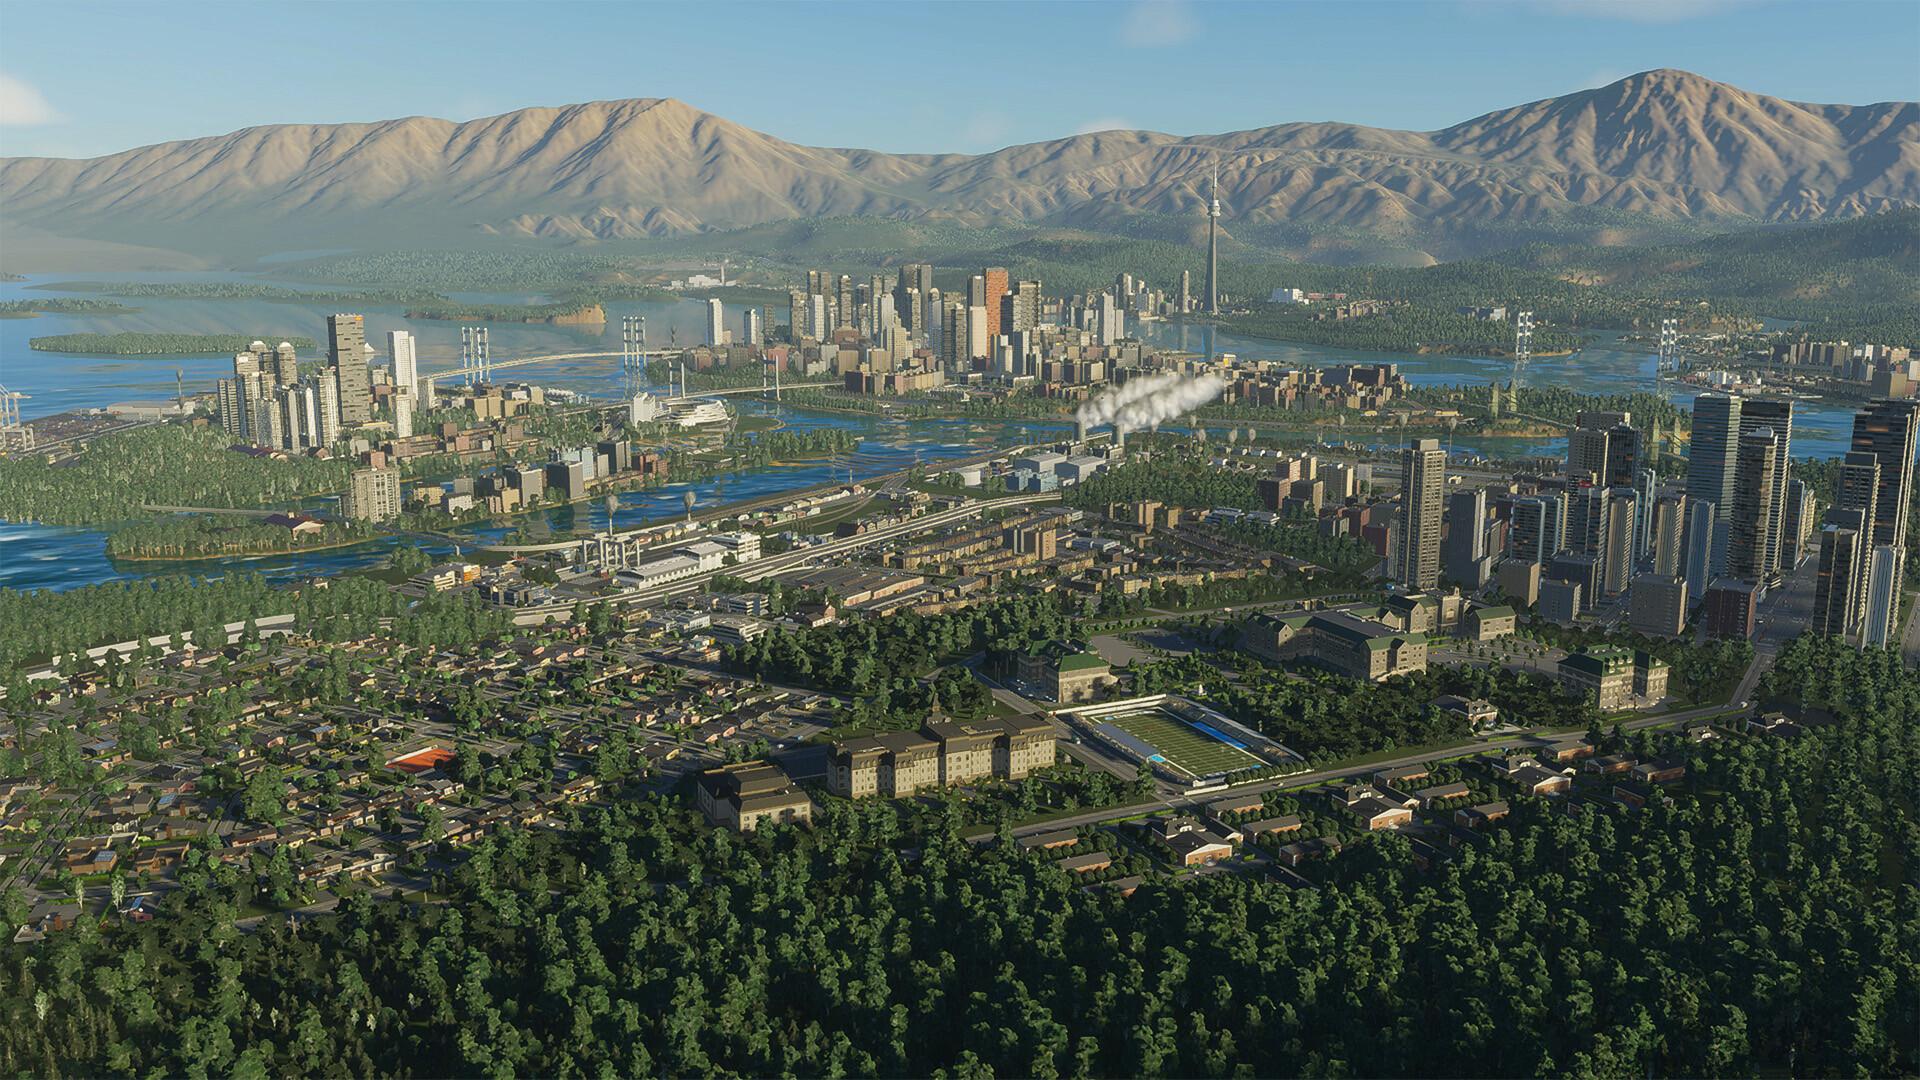 Obrázok z hry Cities: Skylines II.